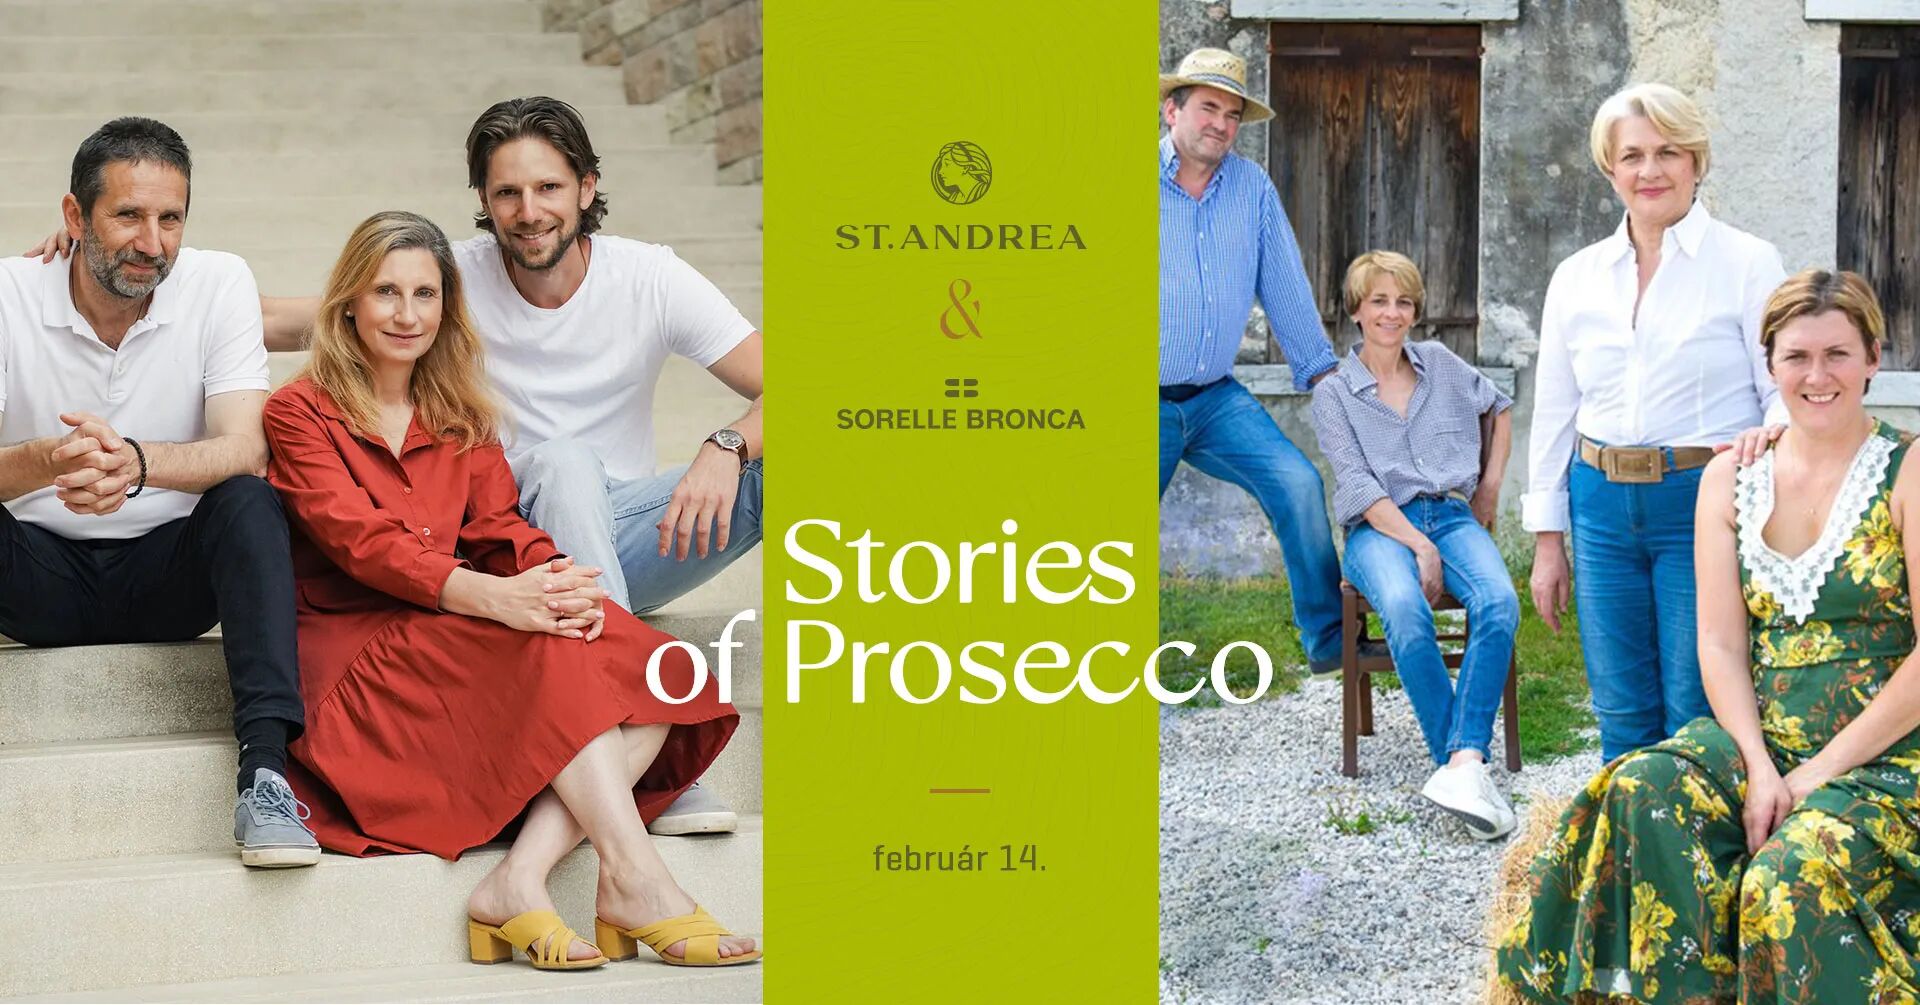 Stories of Prosecco: a St. Andrea vendége a Sorelle Bronca